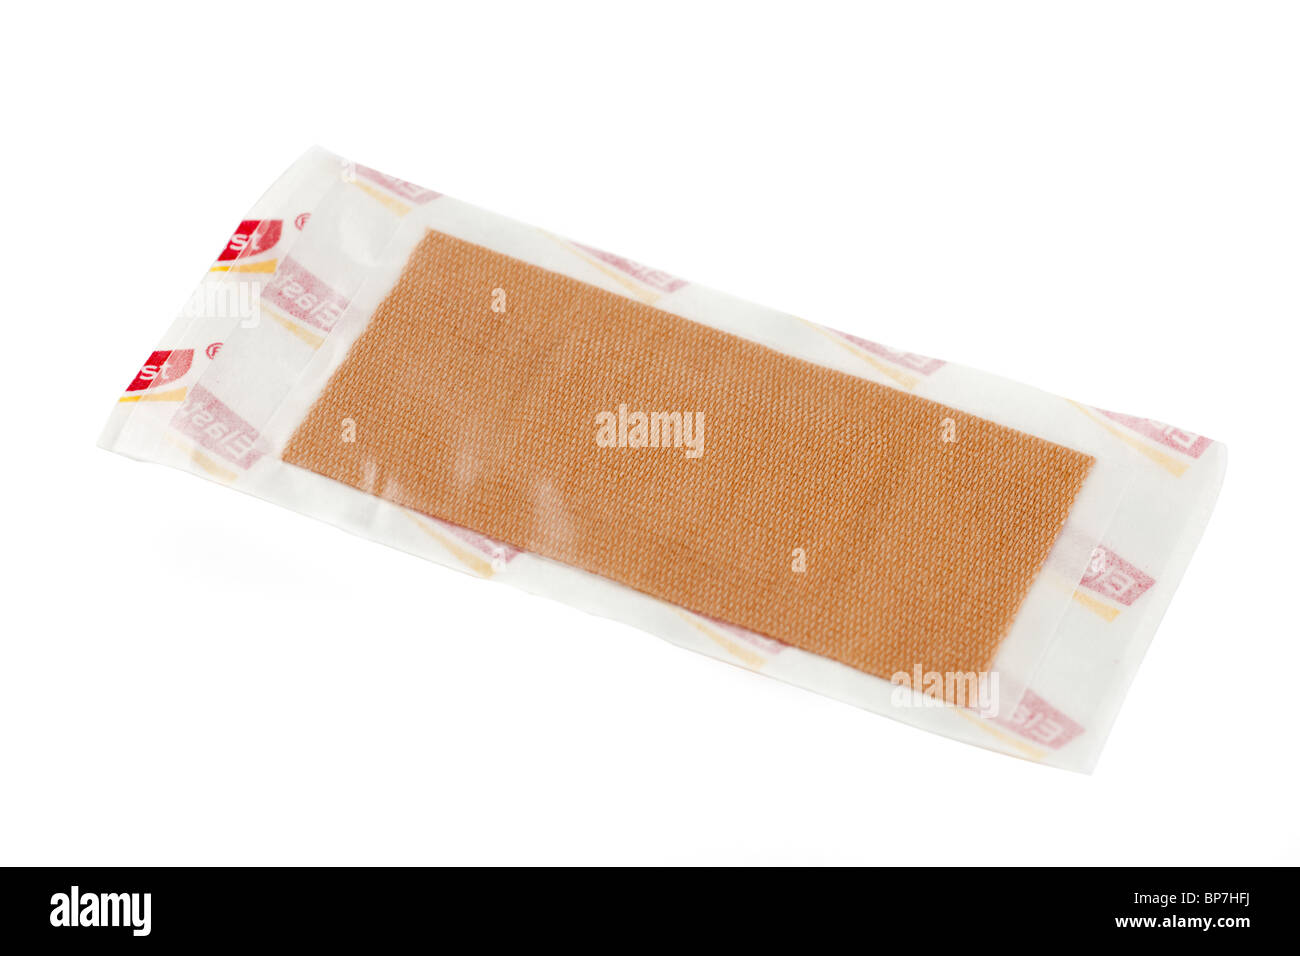 Elastoplast plaster in unopened protective sleeve Stock Photo